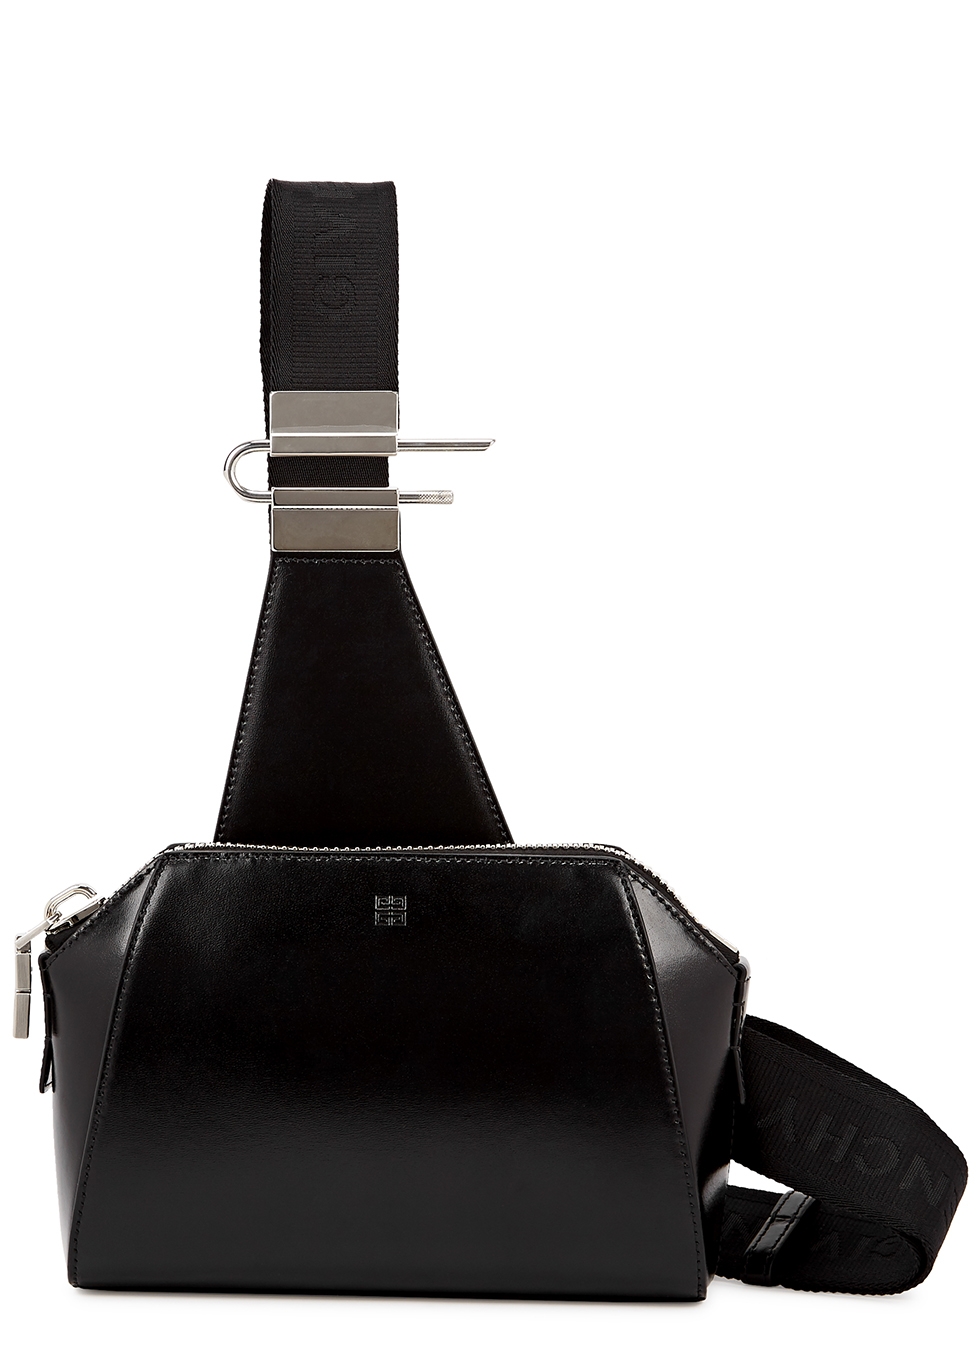 Antigona black leather cross-body bag